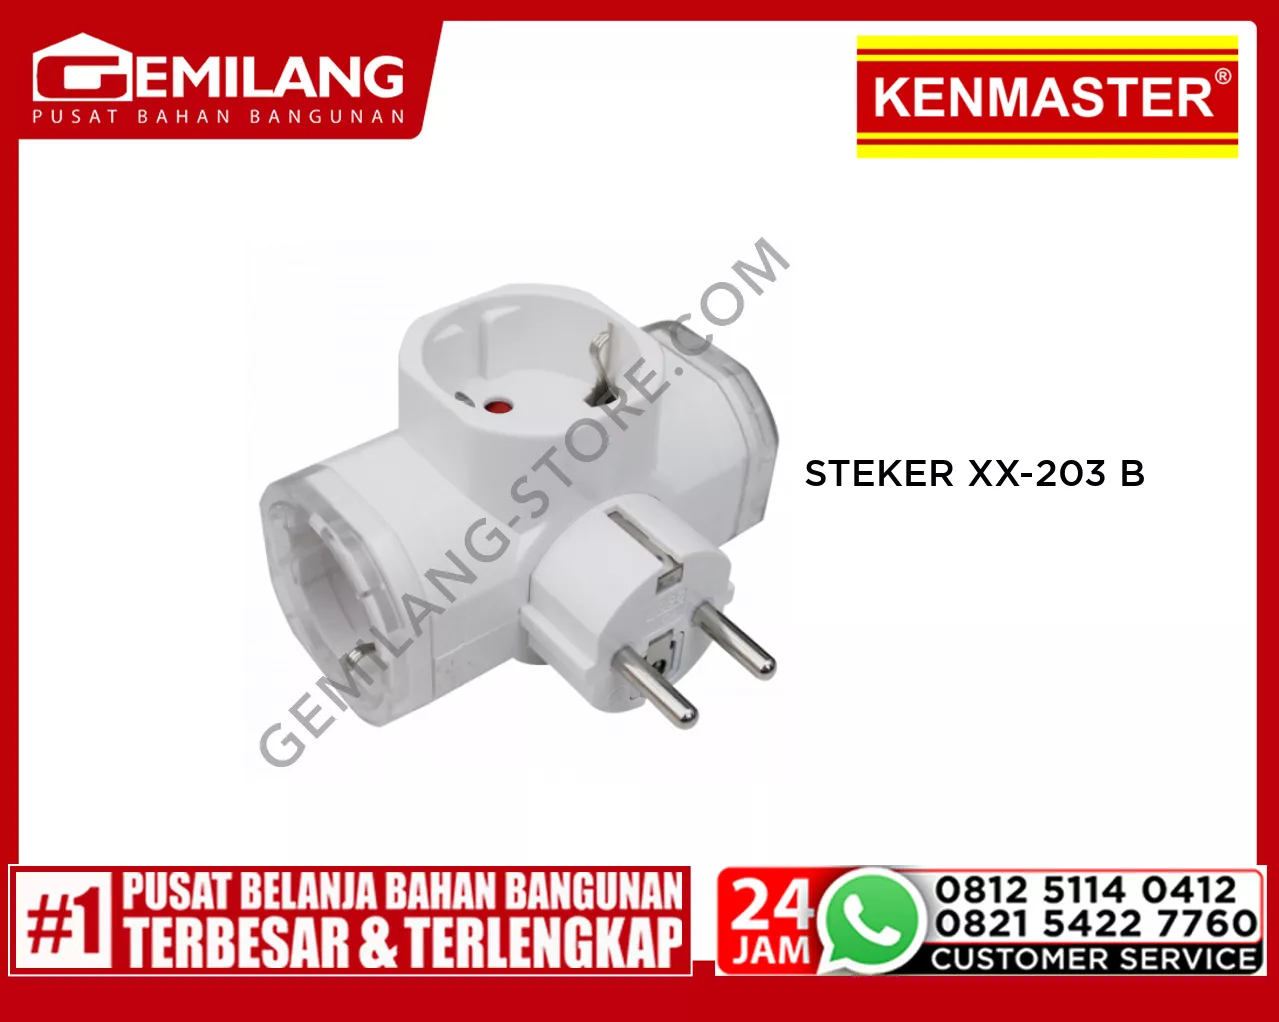 KENMASTER STEKER XX-203 B